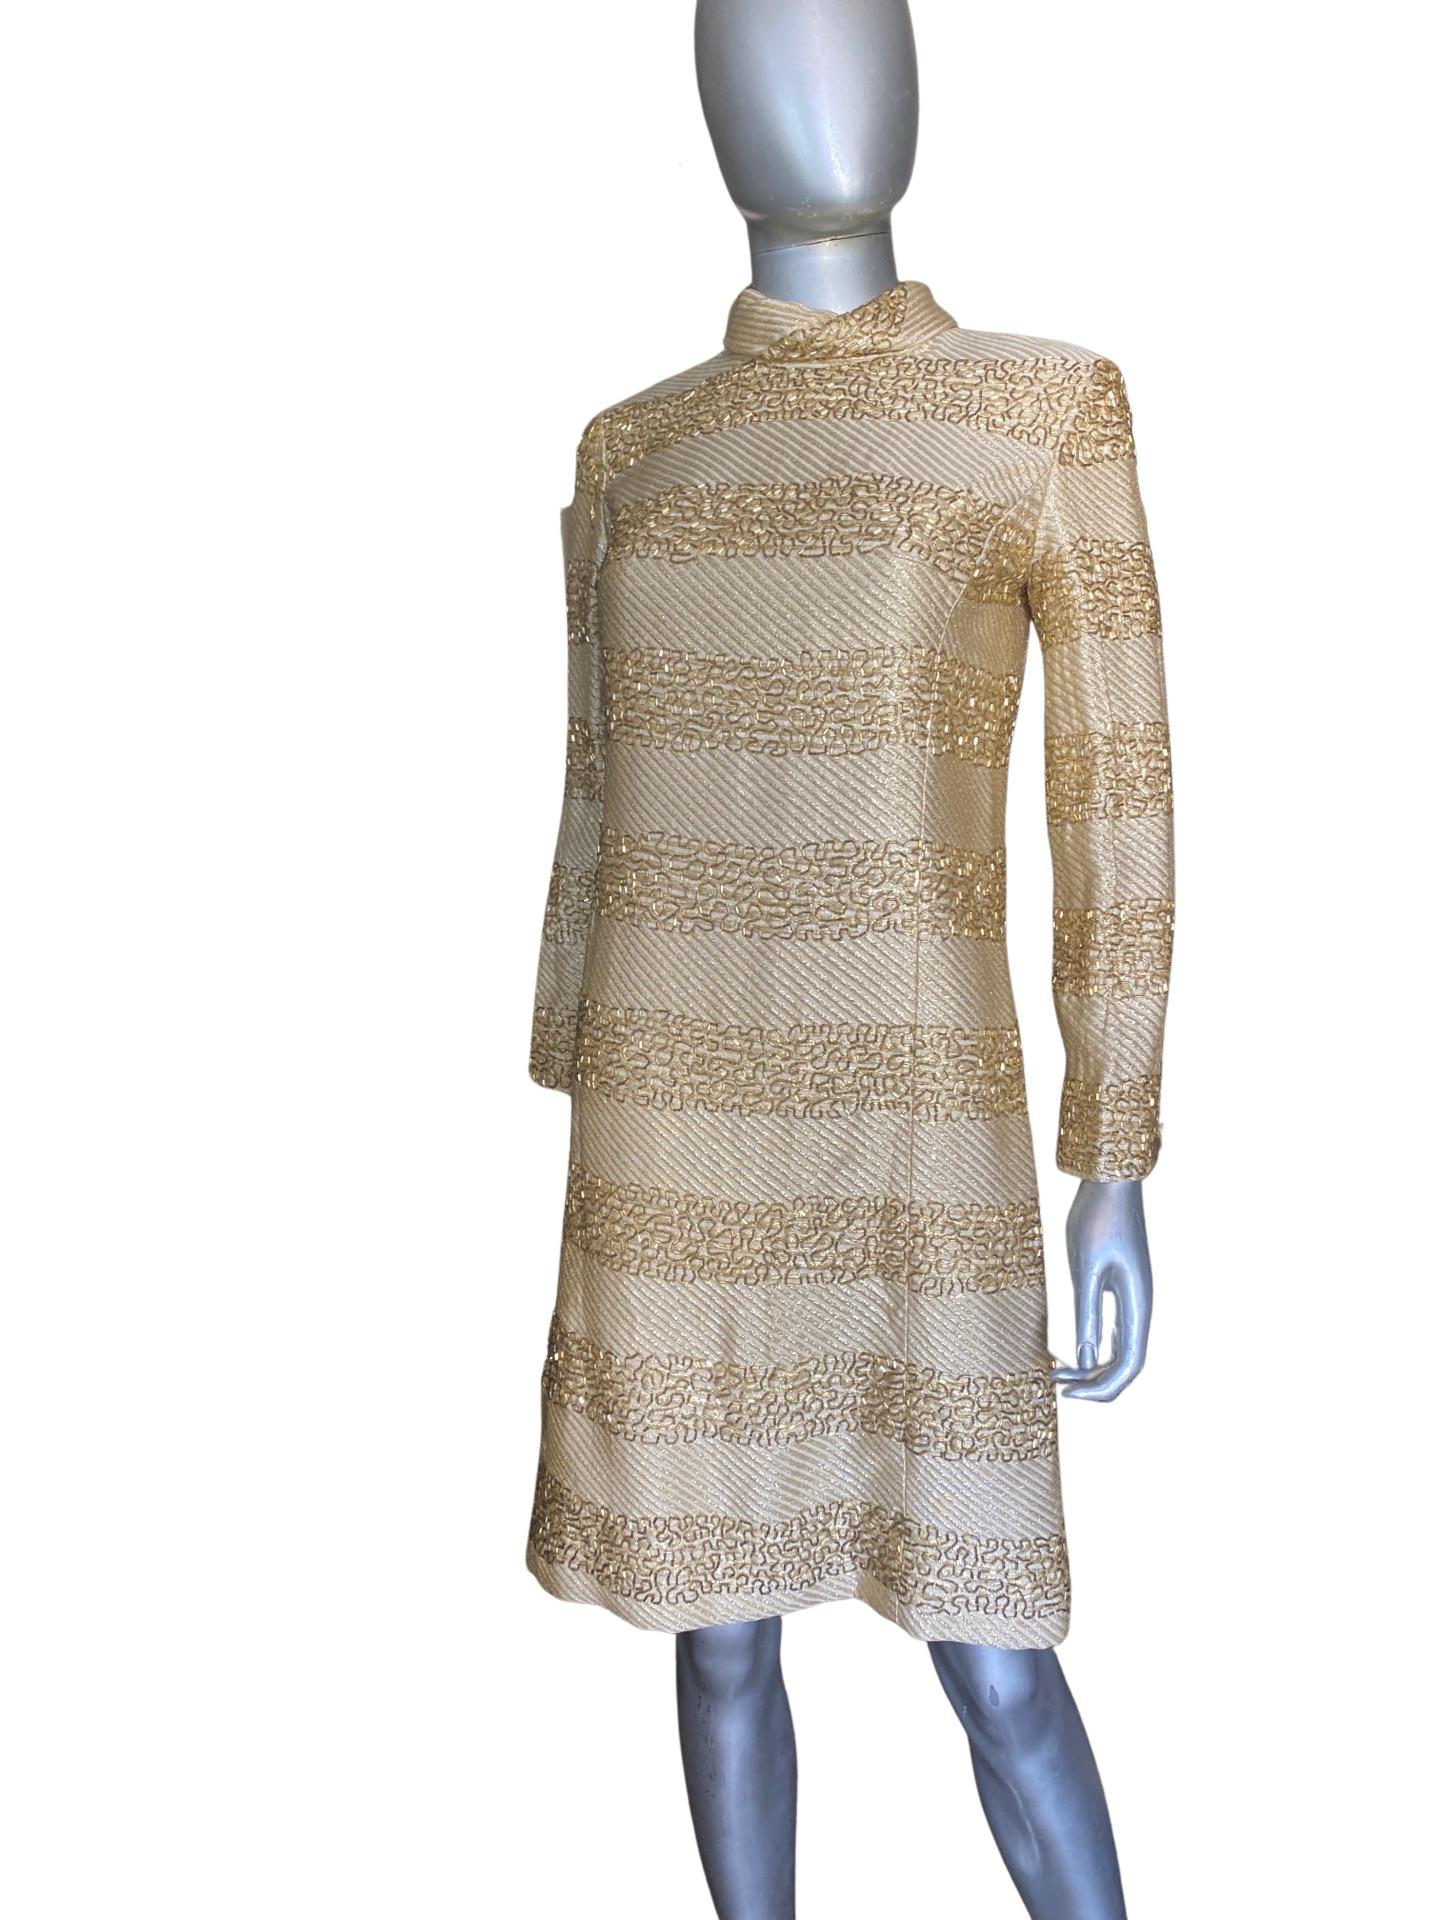 Gold Beaded Vintage 1960s Chemise Dress for Saks Fifth Avenue 1